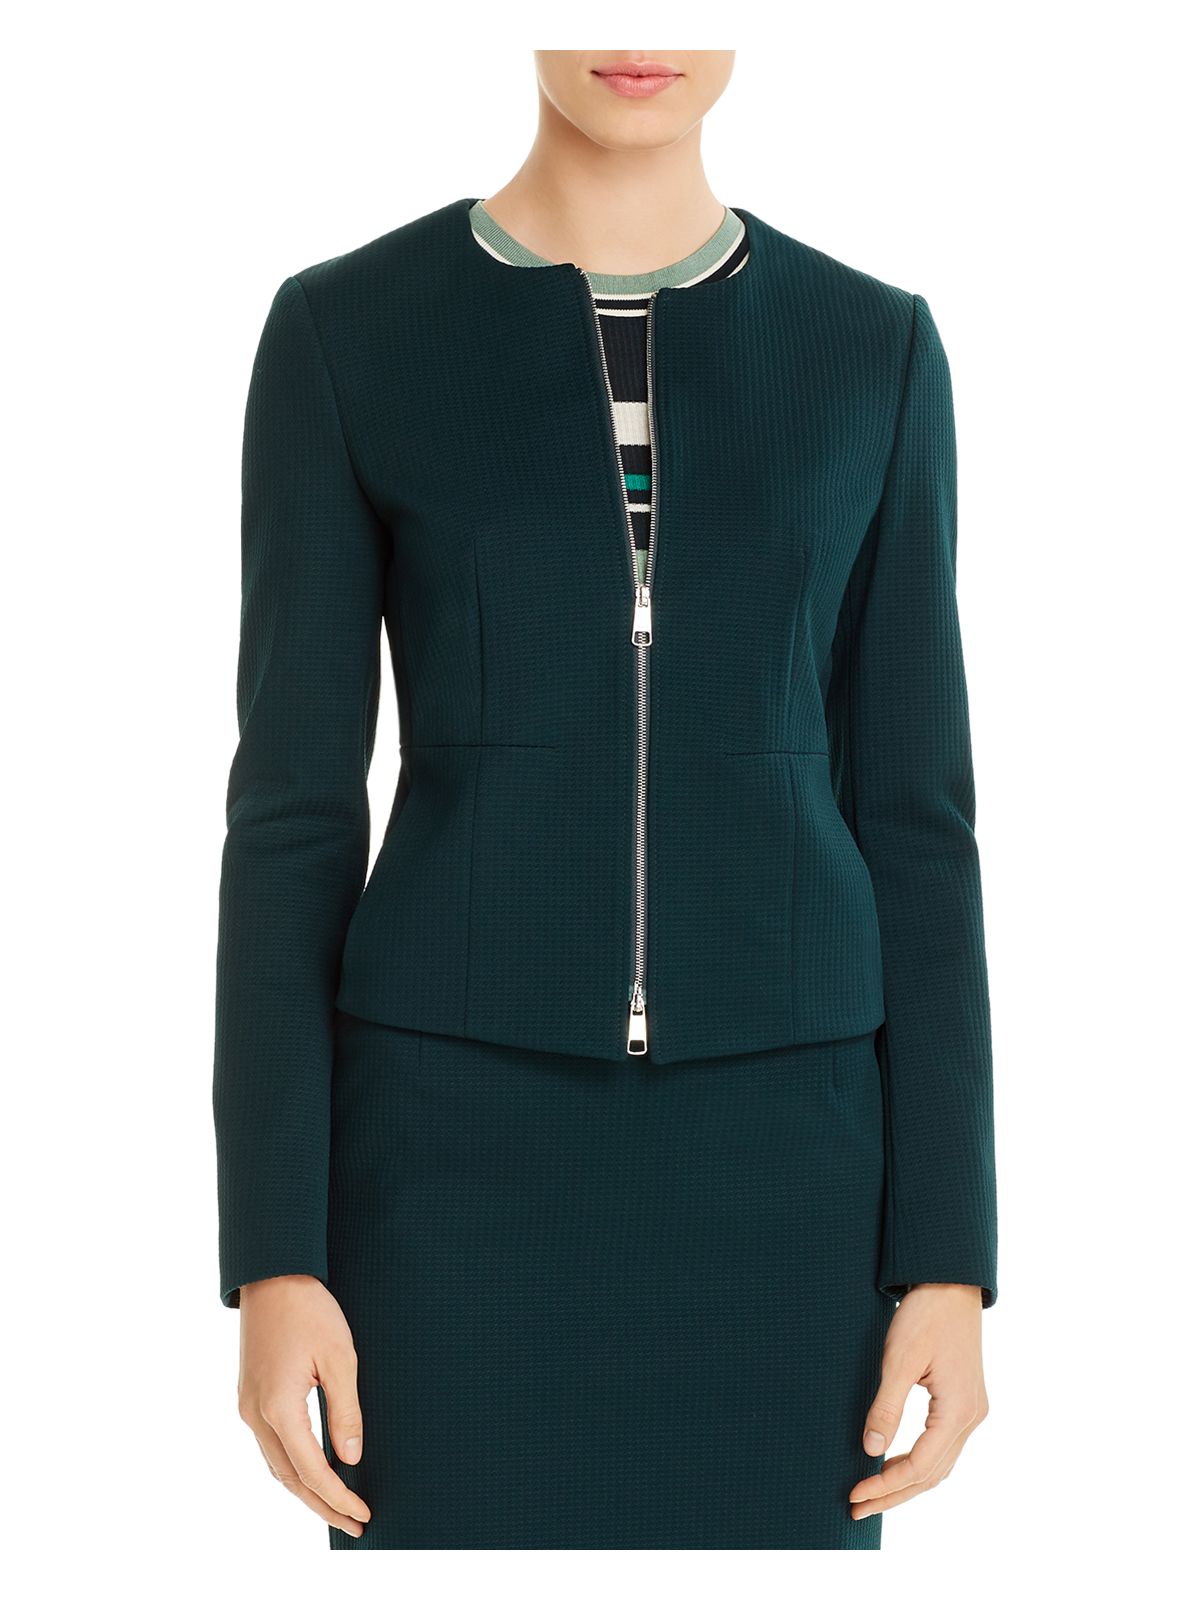 BOSS Womens Green Stretch Zippered Textured Lined Long Sleeve Crew Neck Wear To Work Blazer Jacket 8